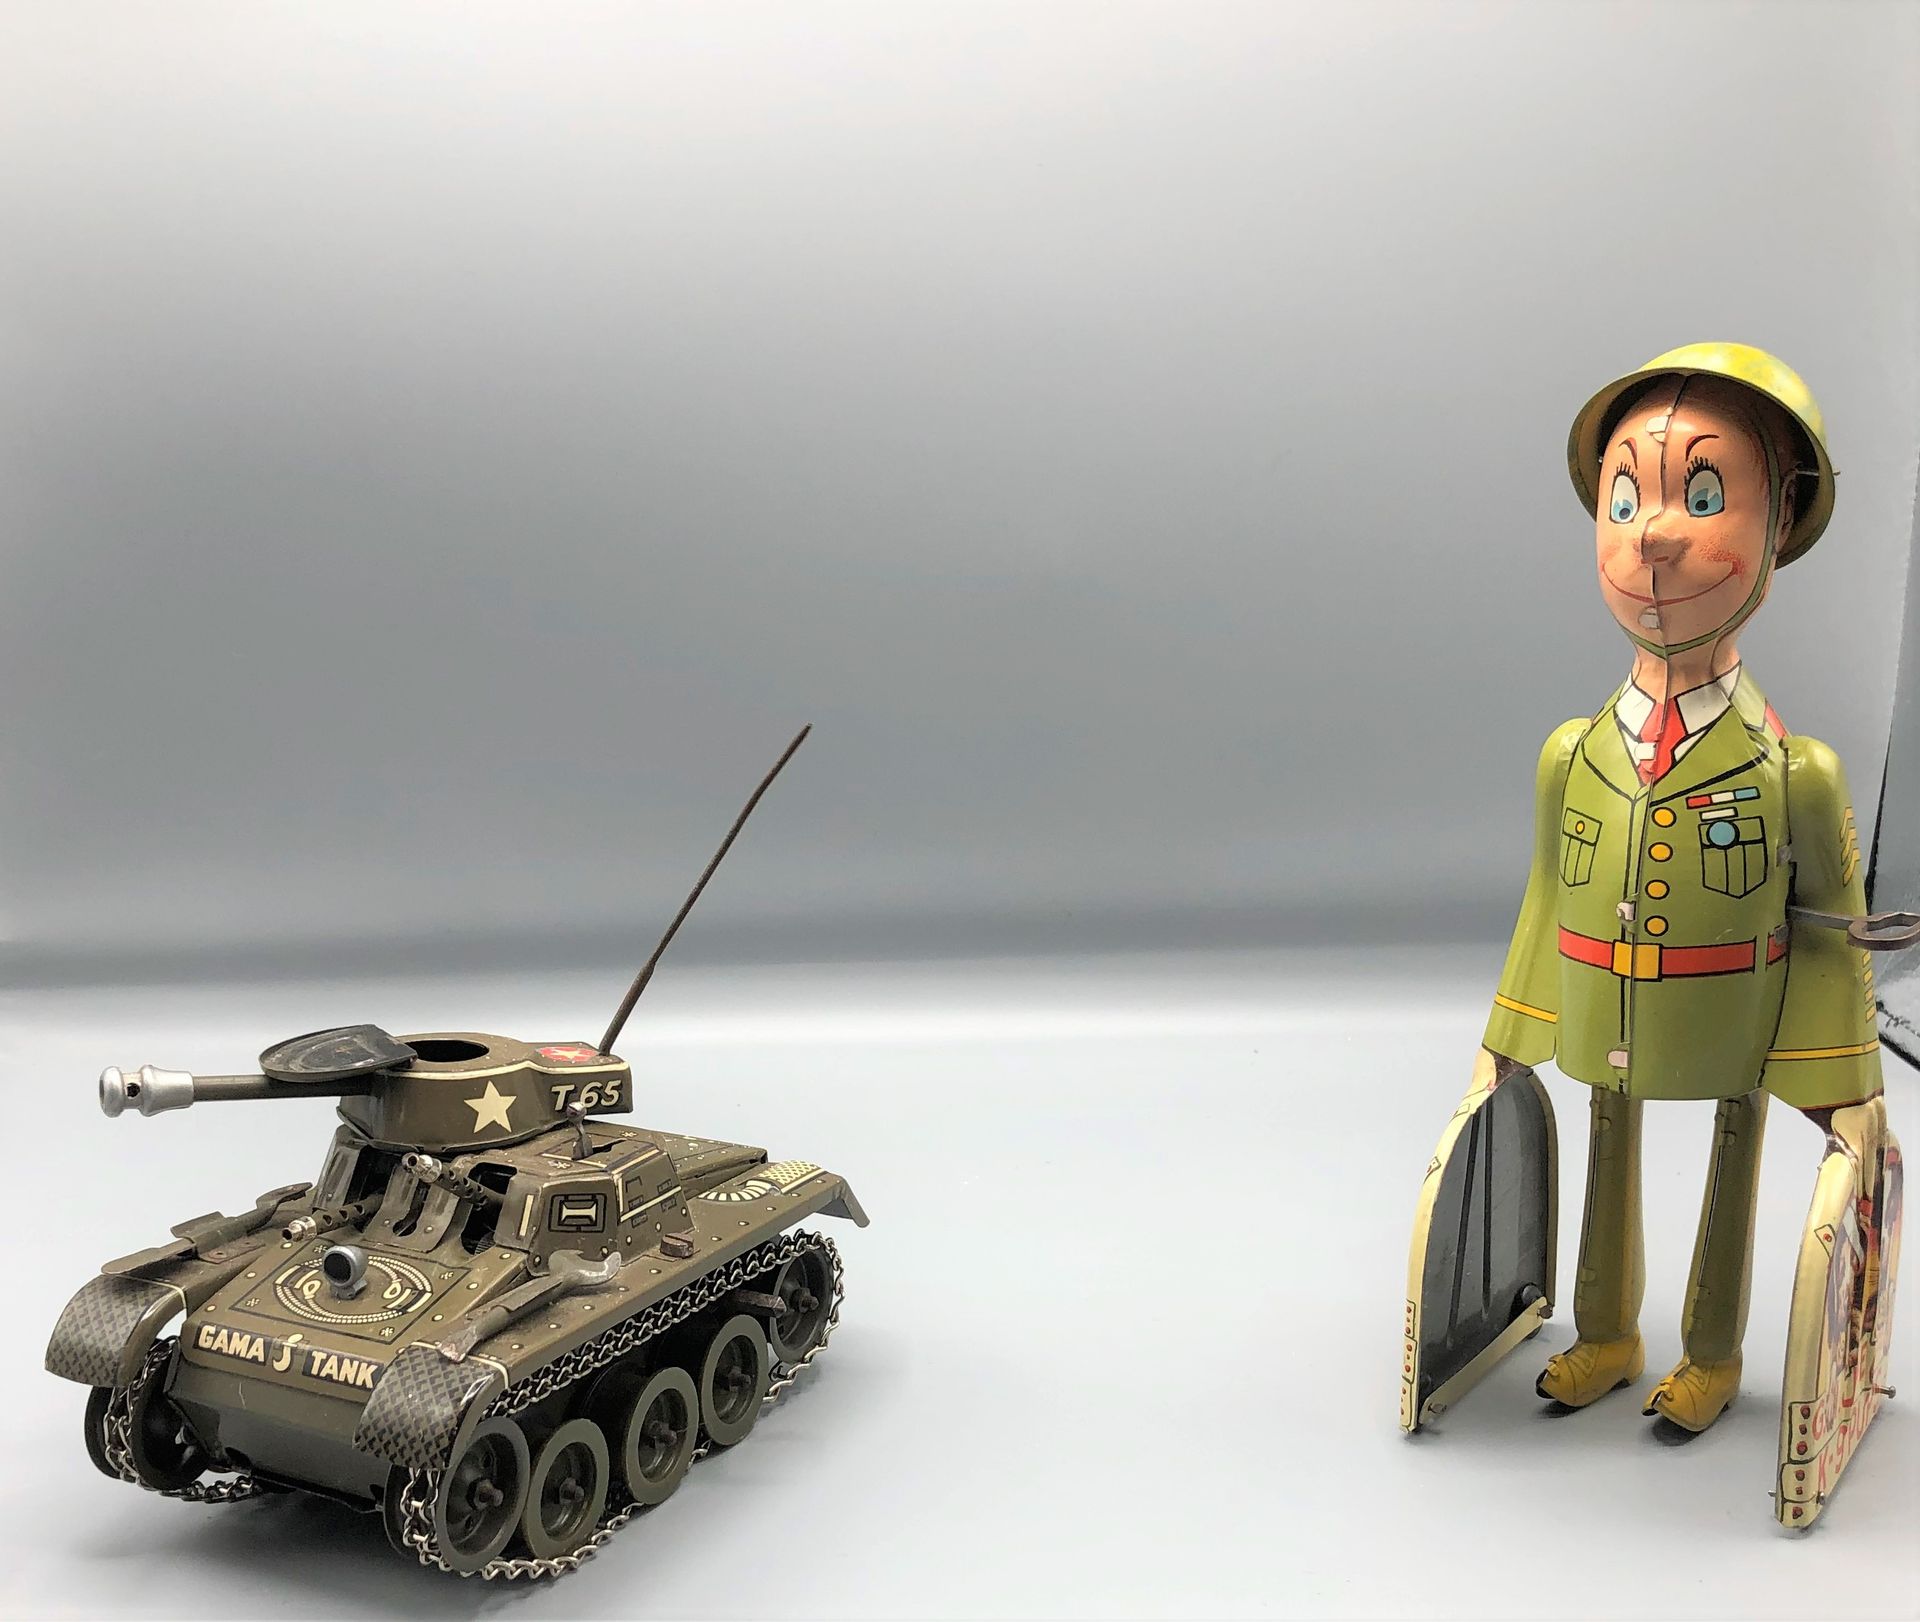 Null GAMA US Tank mechanical, UNIQUE ART : GI Joe mechanical character

1950



&hellip;